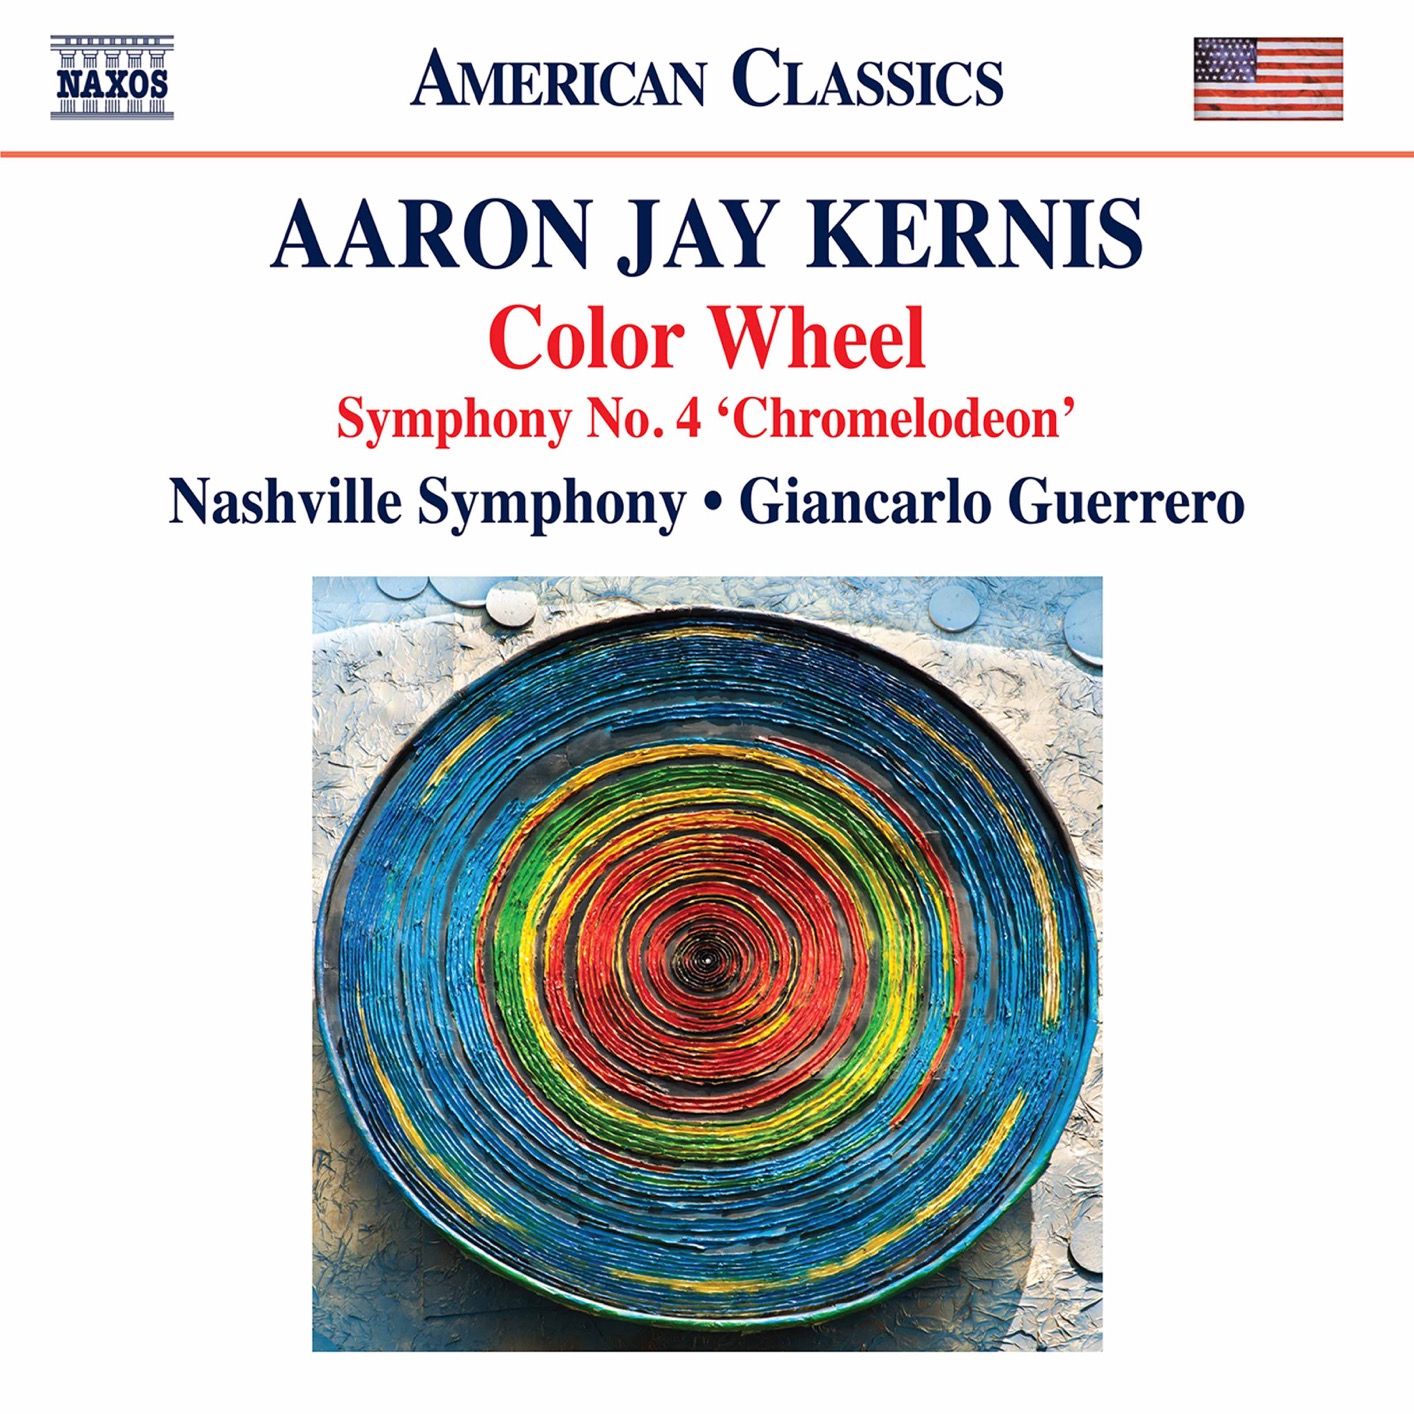 Nashville Symphony, Giancarlo Guerrero - Aaron Jay Kernis - Color Wheel - Symphony No. 4 ”Chromelodeon” (Live) (2020) [FLAC 24bit/96kHz]